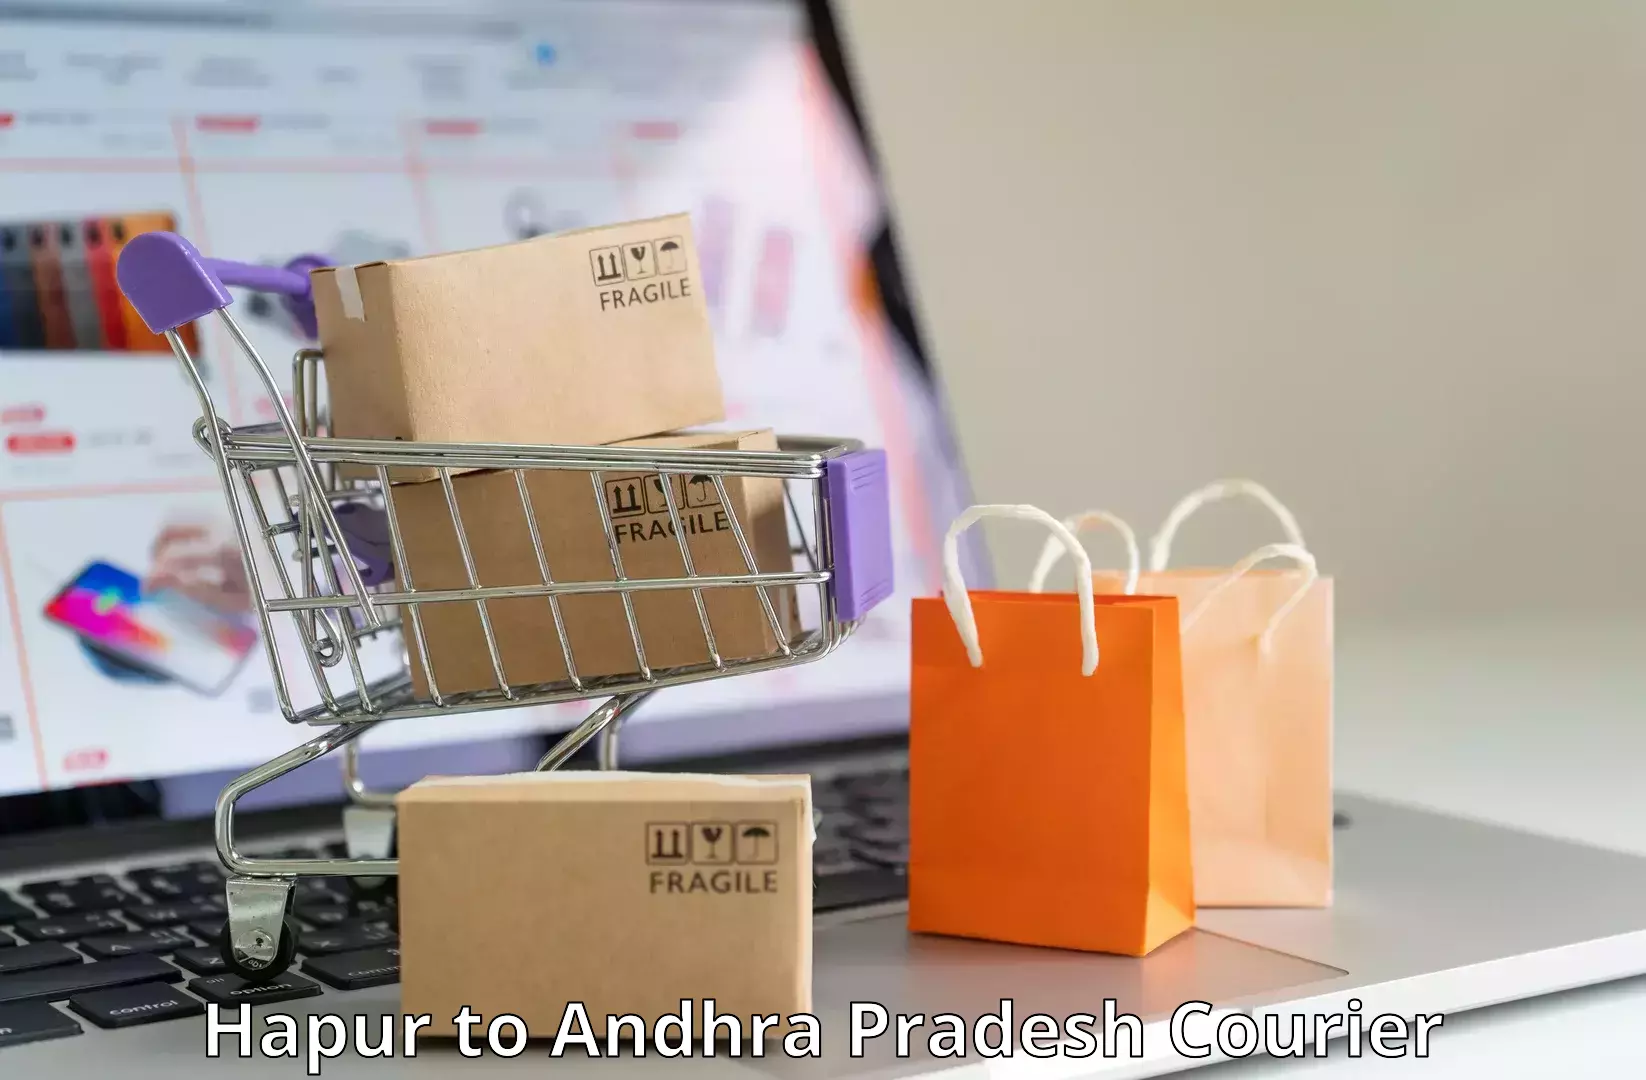 User-friendly delivery service Hapur to Andhra Pradesh